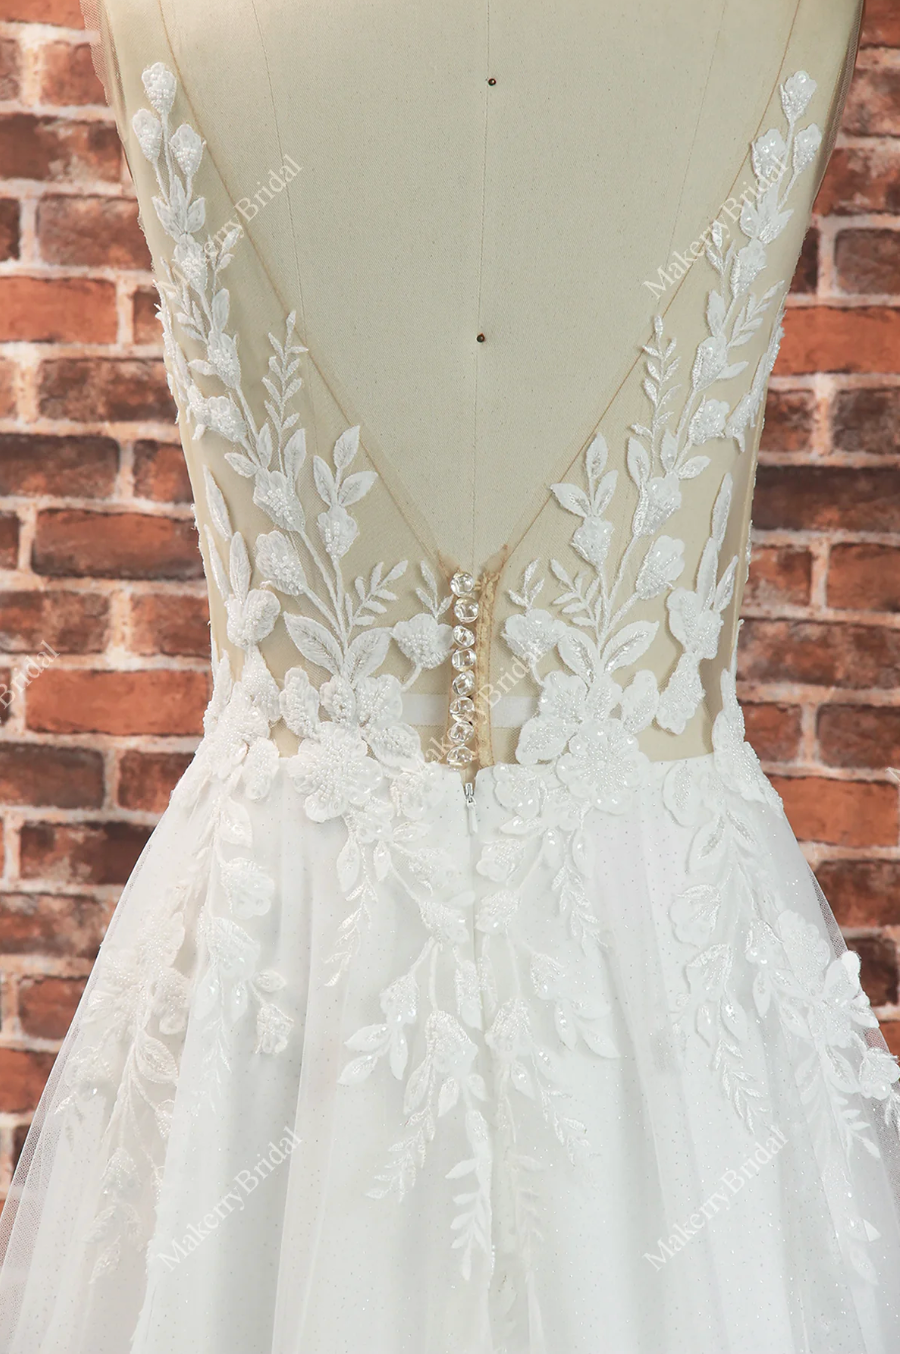 Elegant Illusion Appliques A Line Wedding Dress